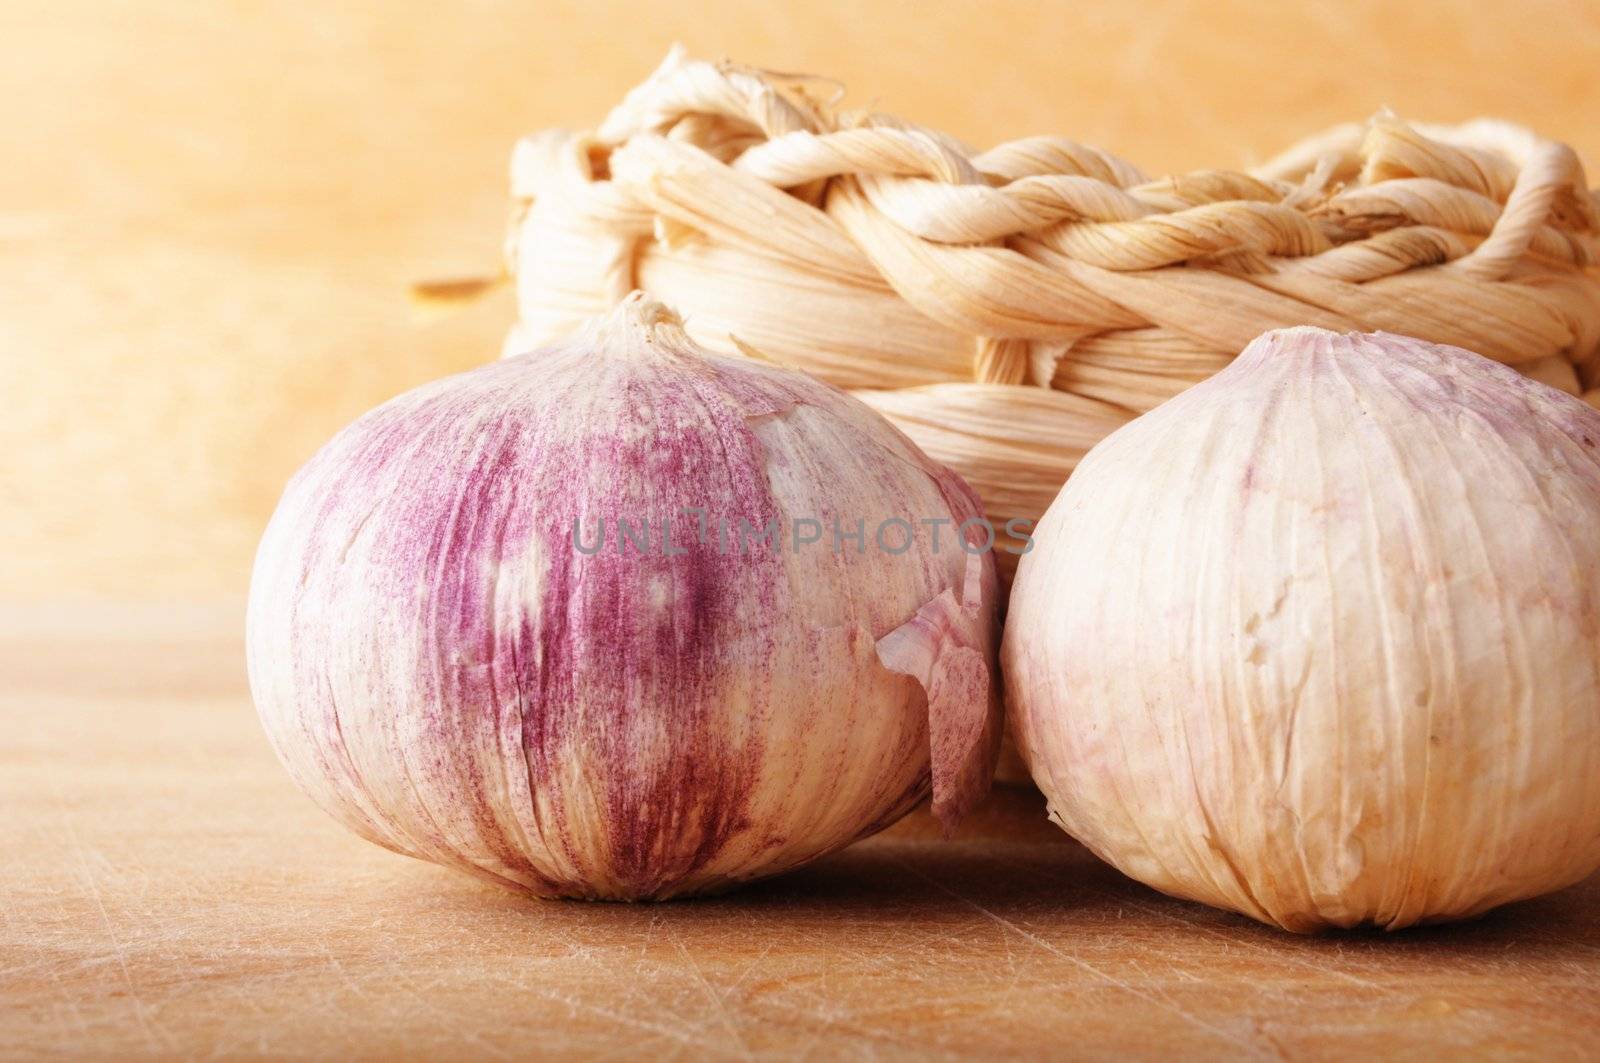 garlic and copyspace showing healthy food concept